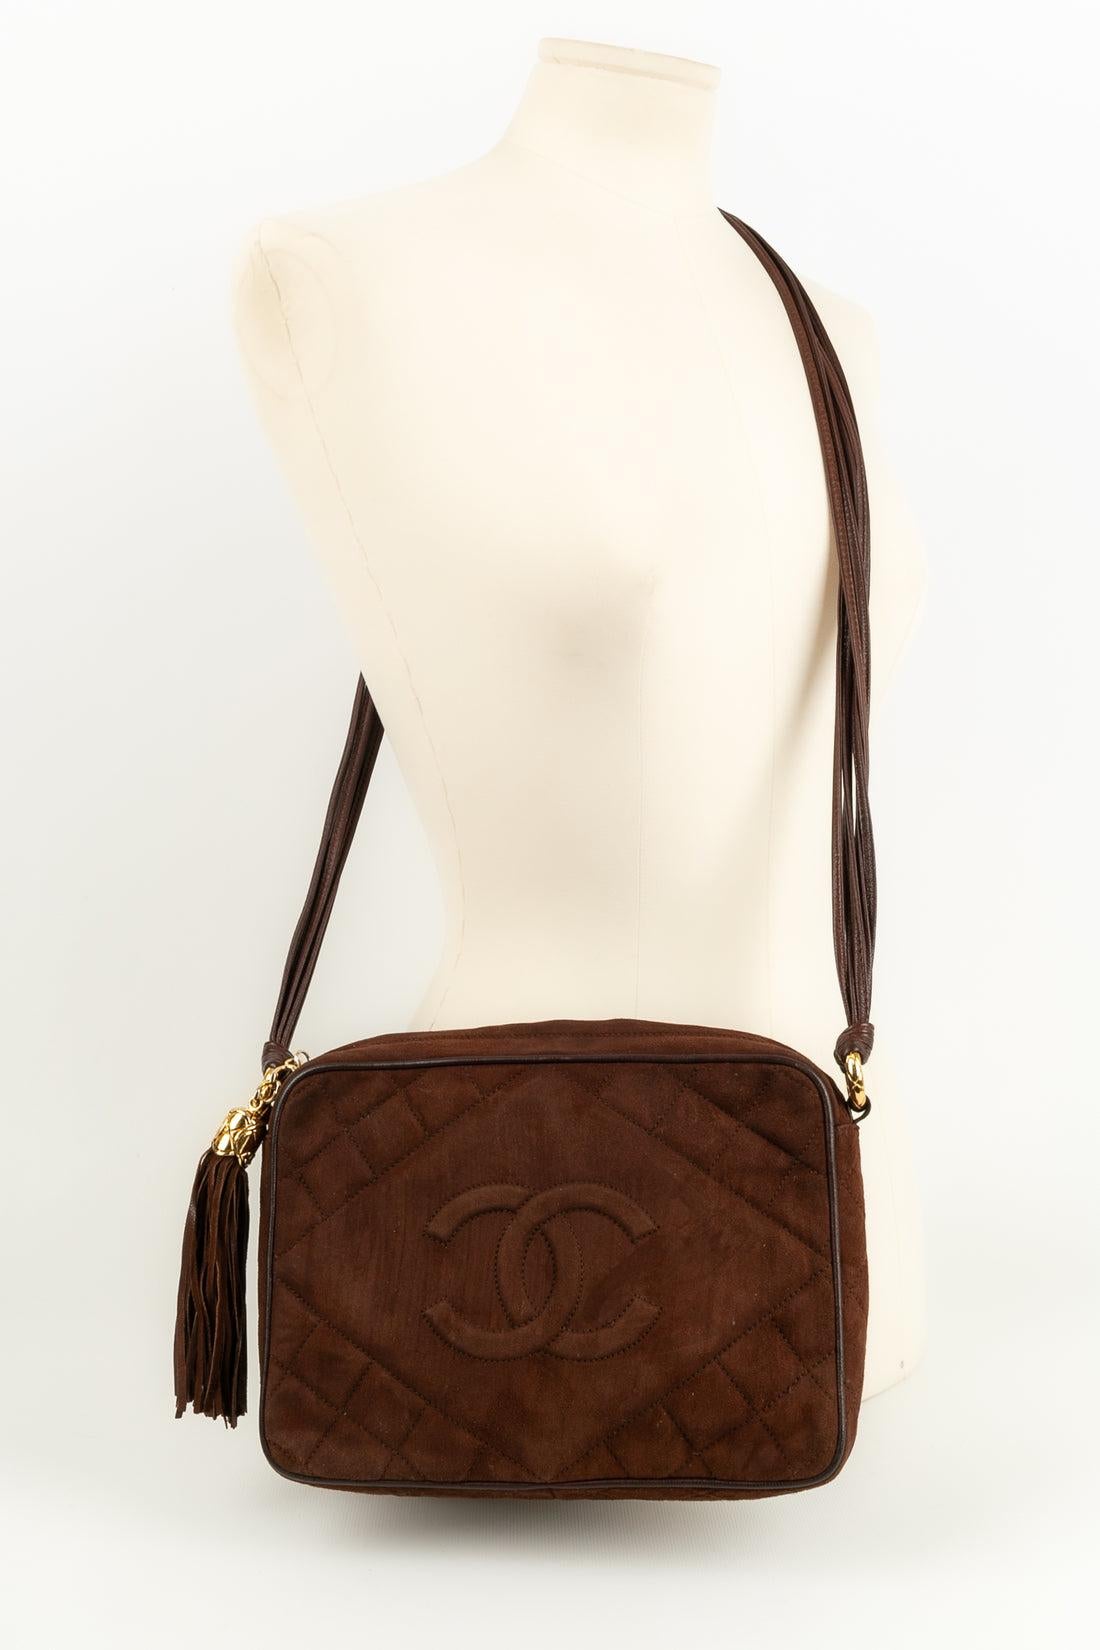 Chanel Brown Suede Bag 8